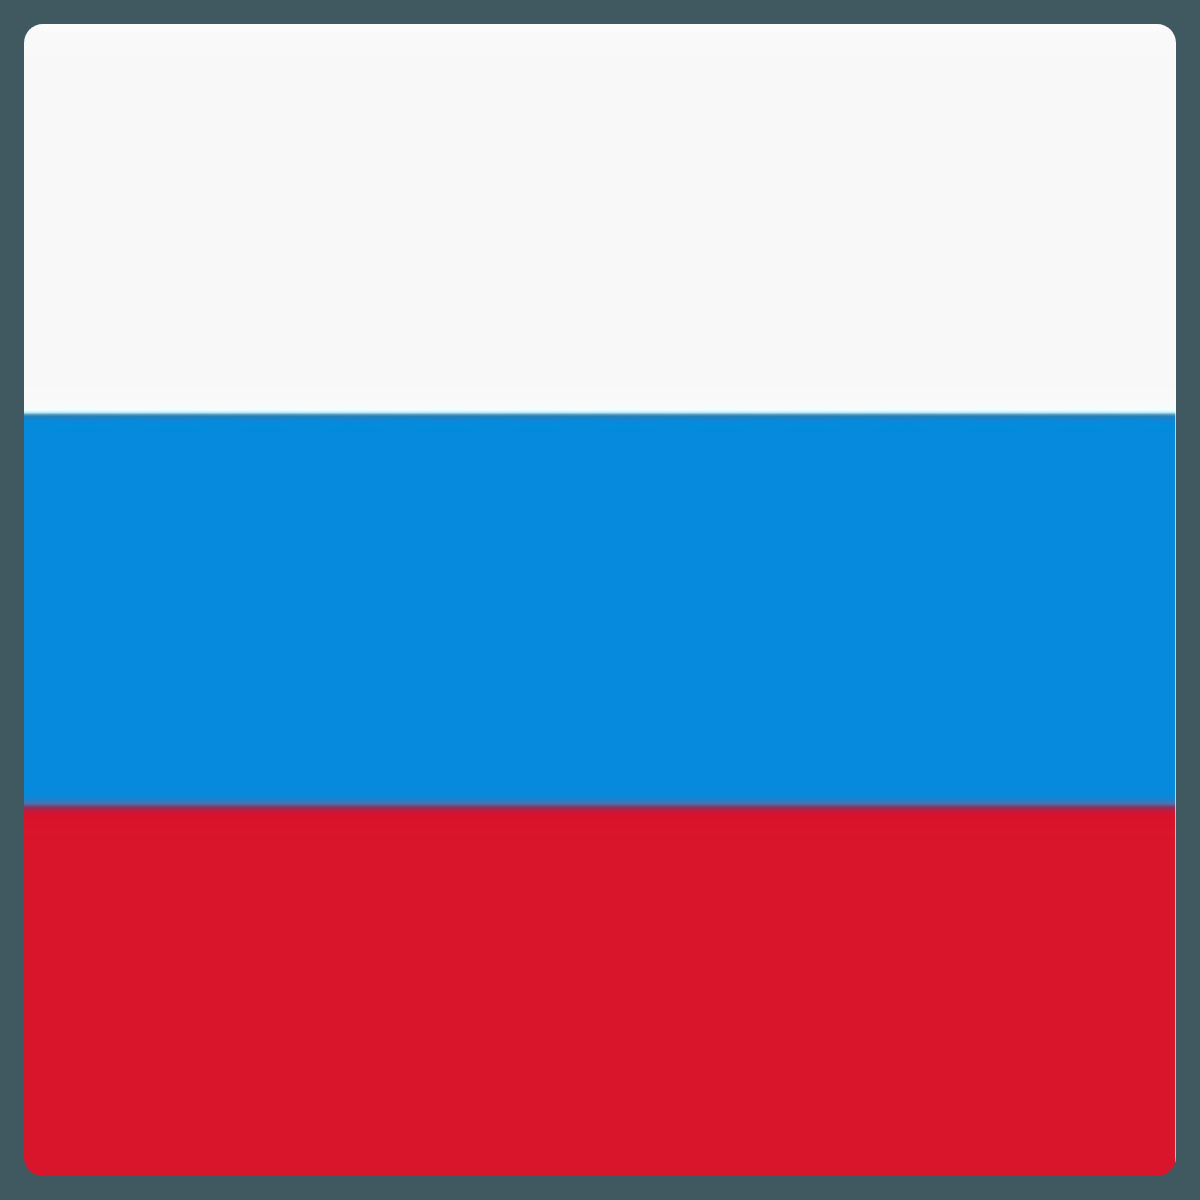 Бело лазоревый. Флаг РФ 1991-1993. Бело лазорево алый флаг России. Бело-лазорево-красный флаг. Бело лазорево алый флаг.